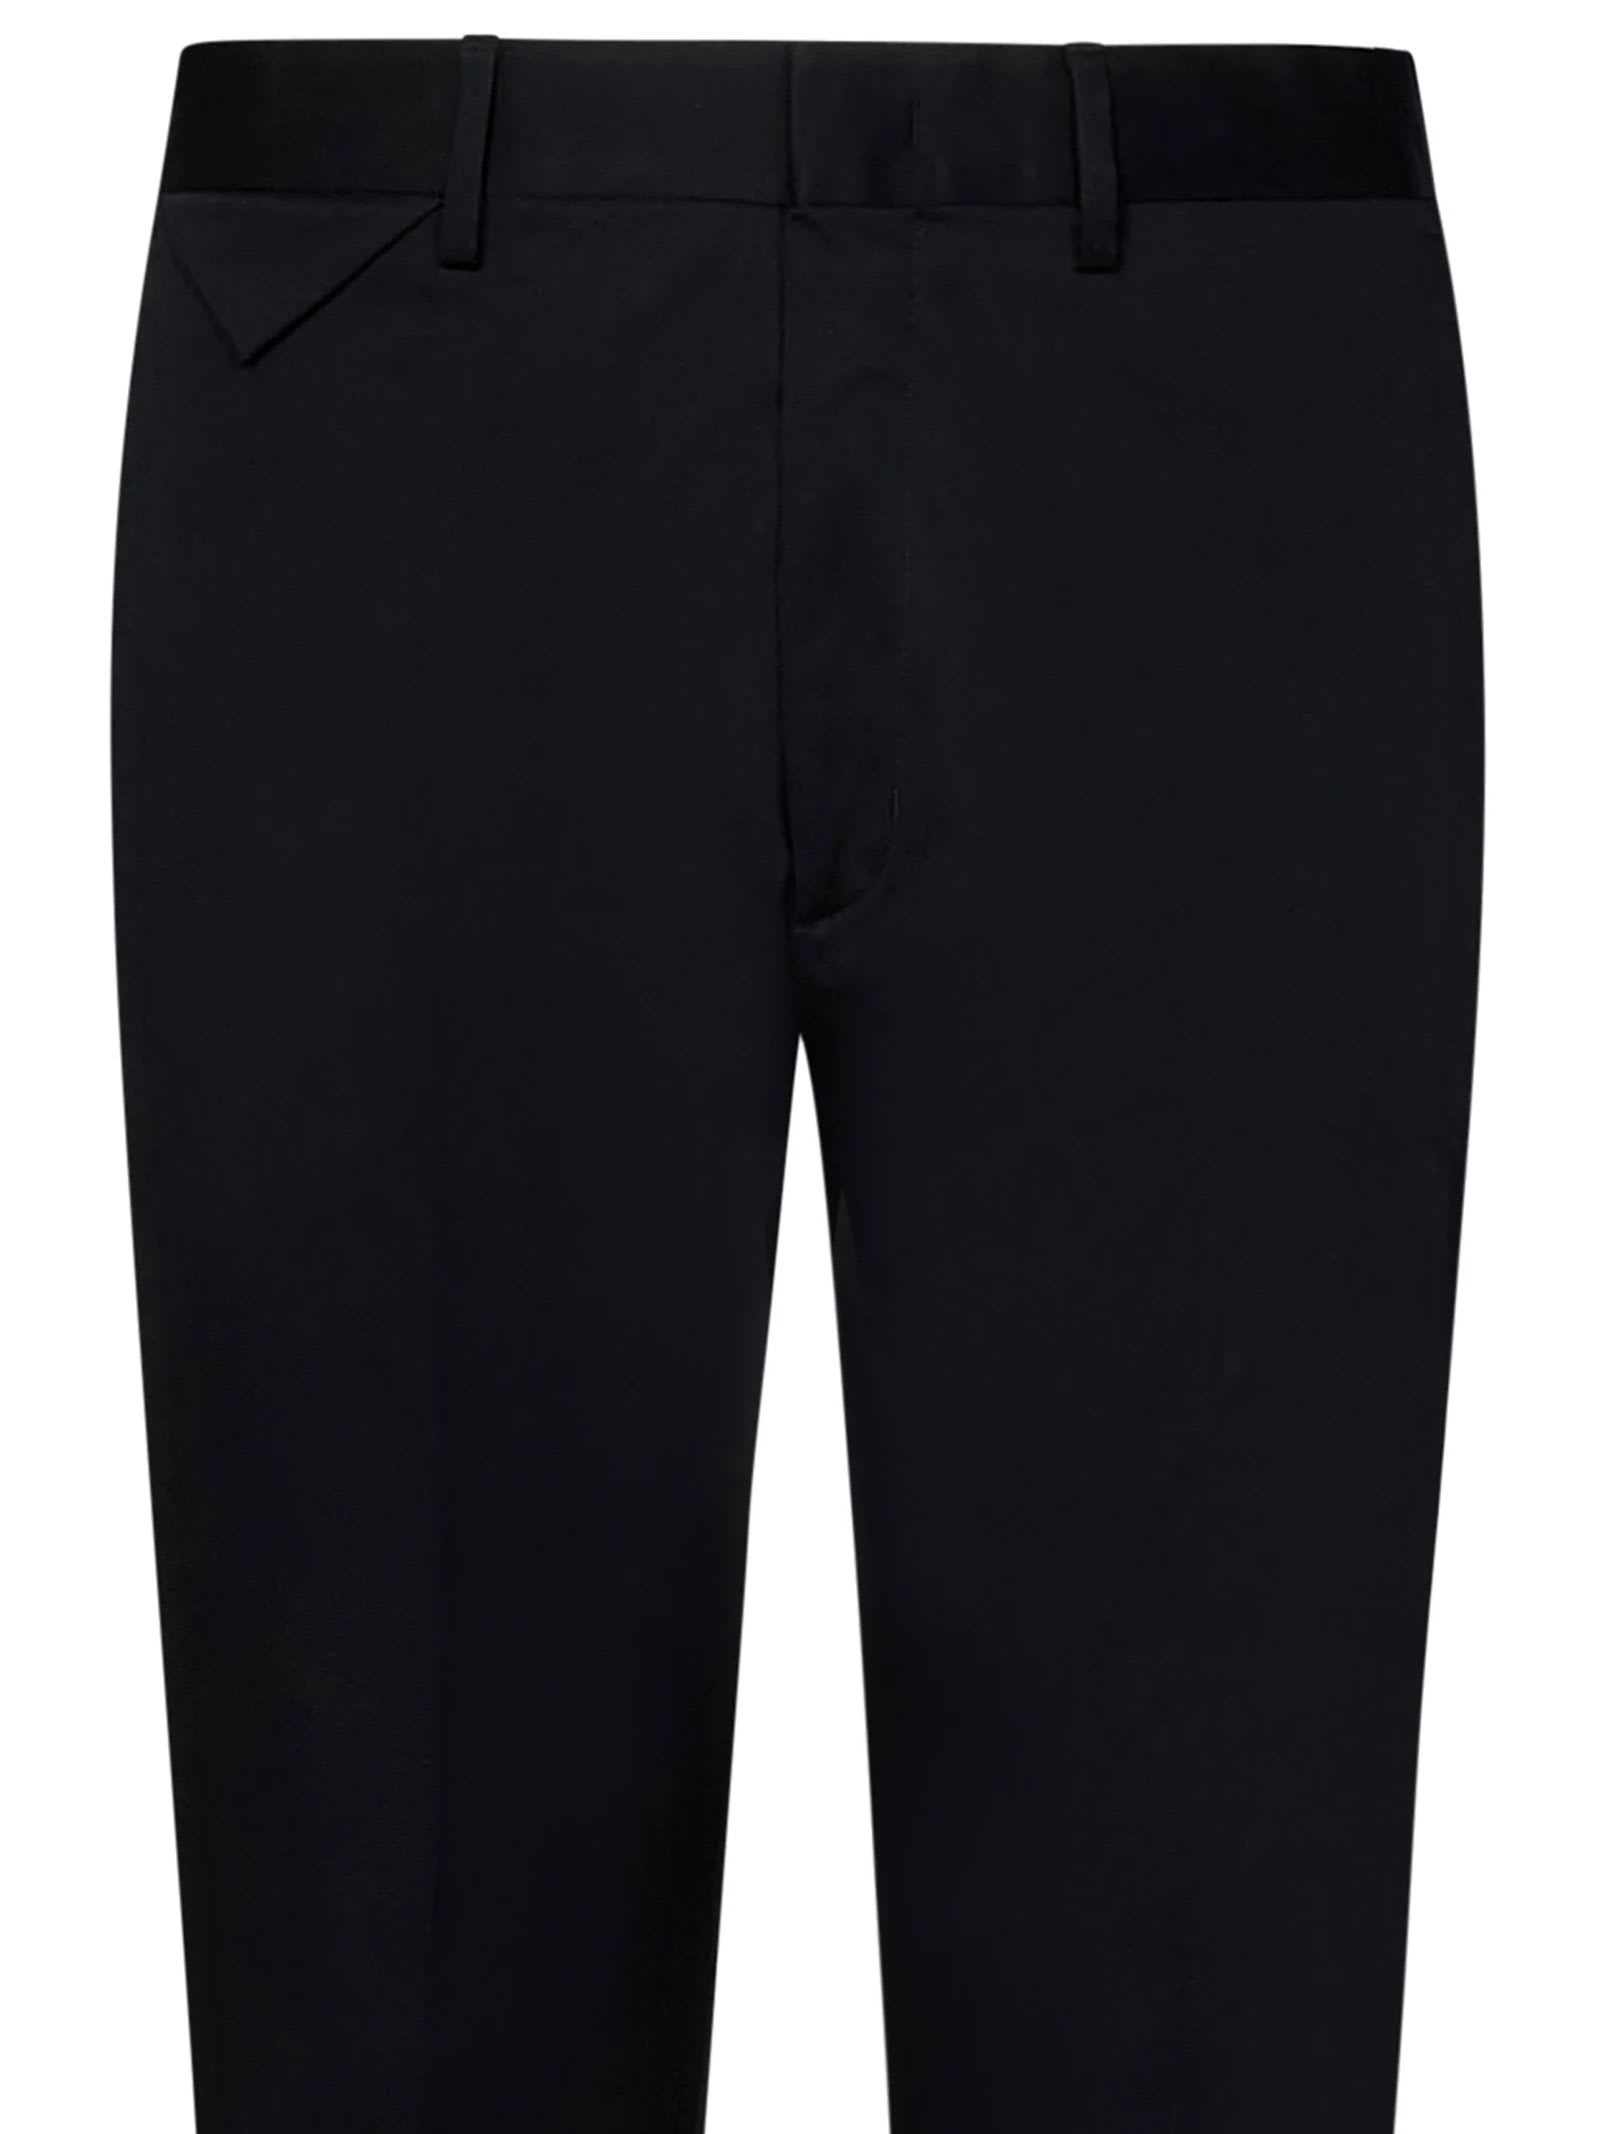 Shop Low Brand Trousers Black